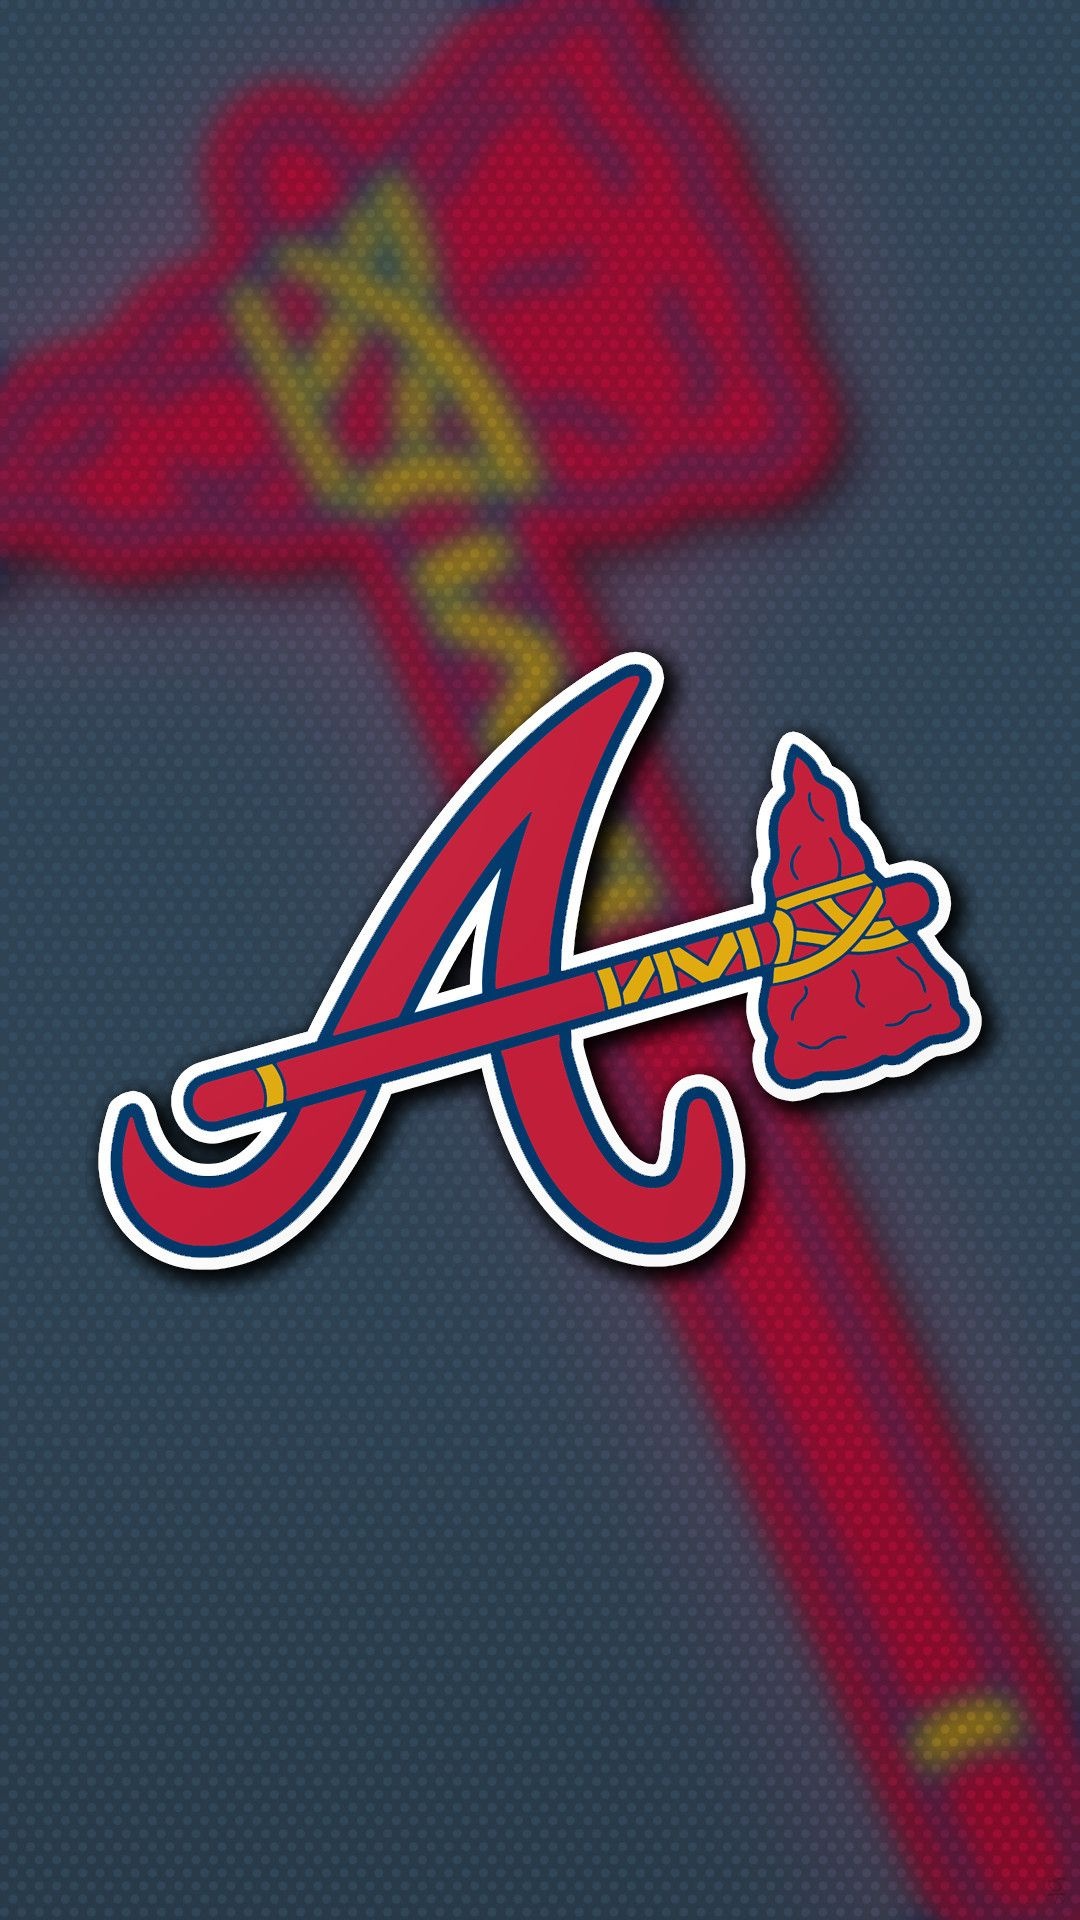 Atlanta Braves, Team wallpapers, Fan support, Baseball spirit, 1080x1920 Full HD Phone